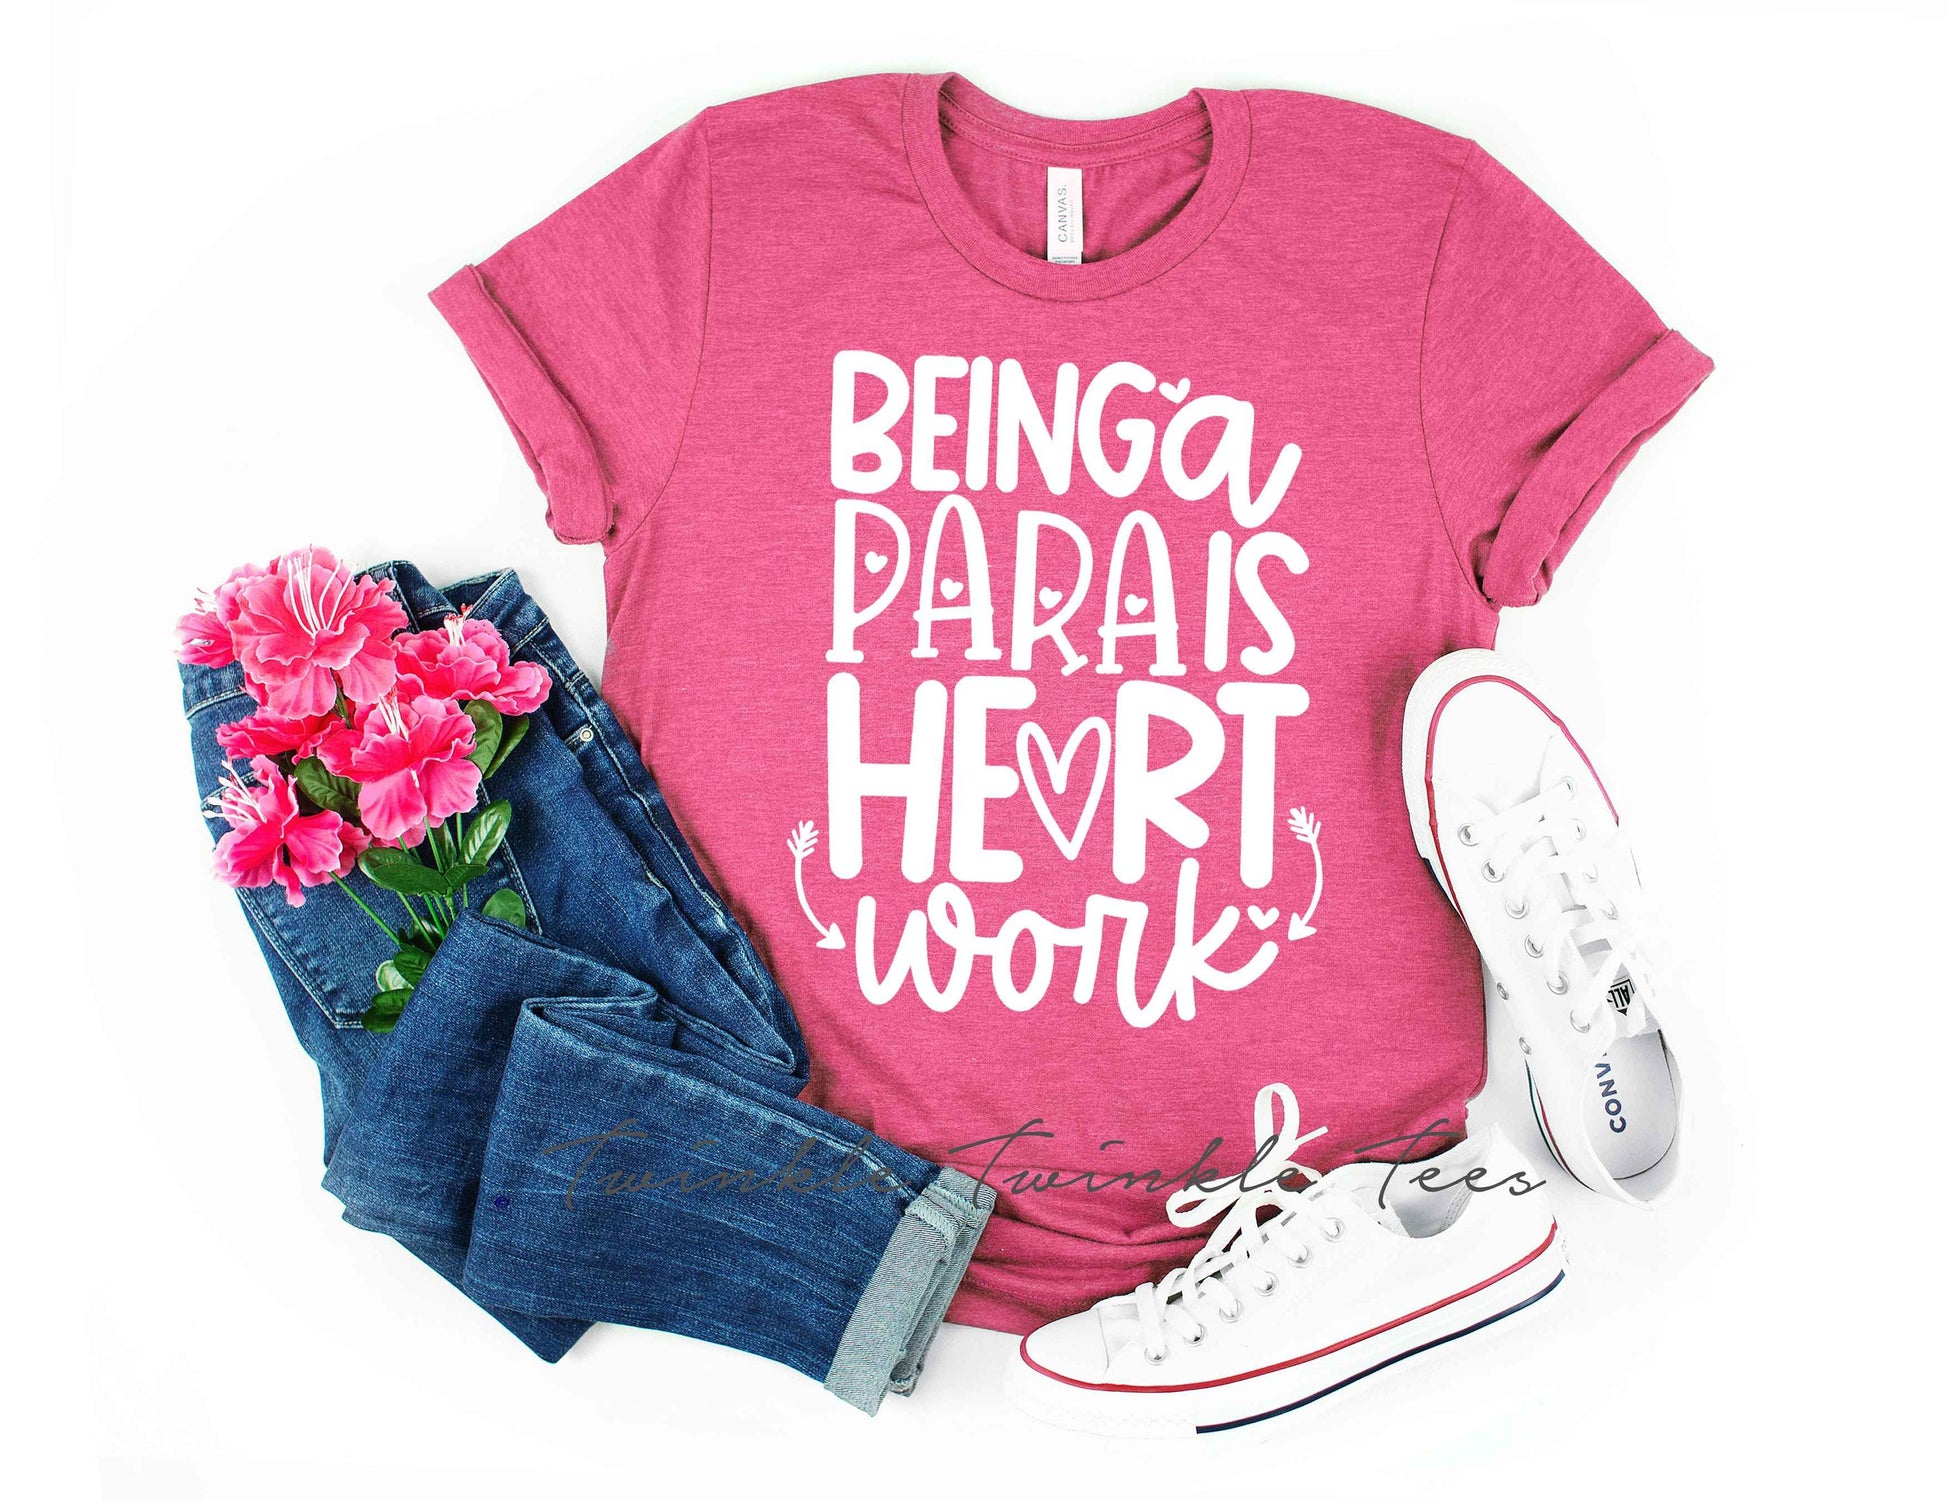 Being a Para Is Heart Work t-shirt - Unisex Bella Canvas t-shirt - Paraprofessional Shirt - Paraprofessional Gift